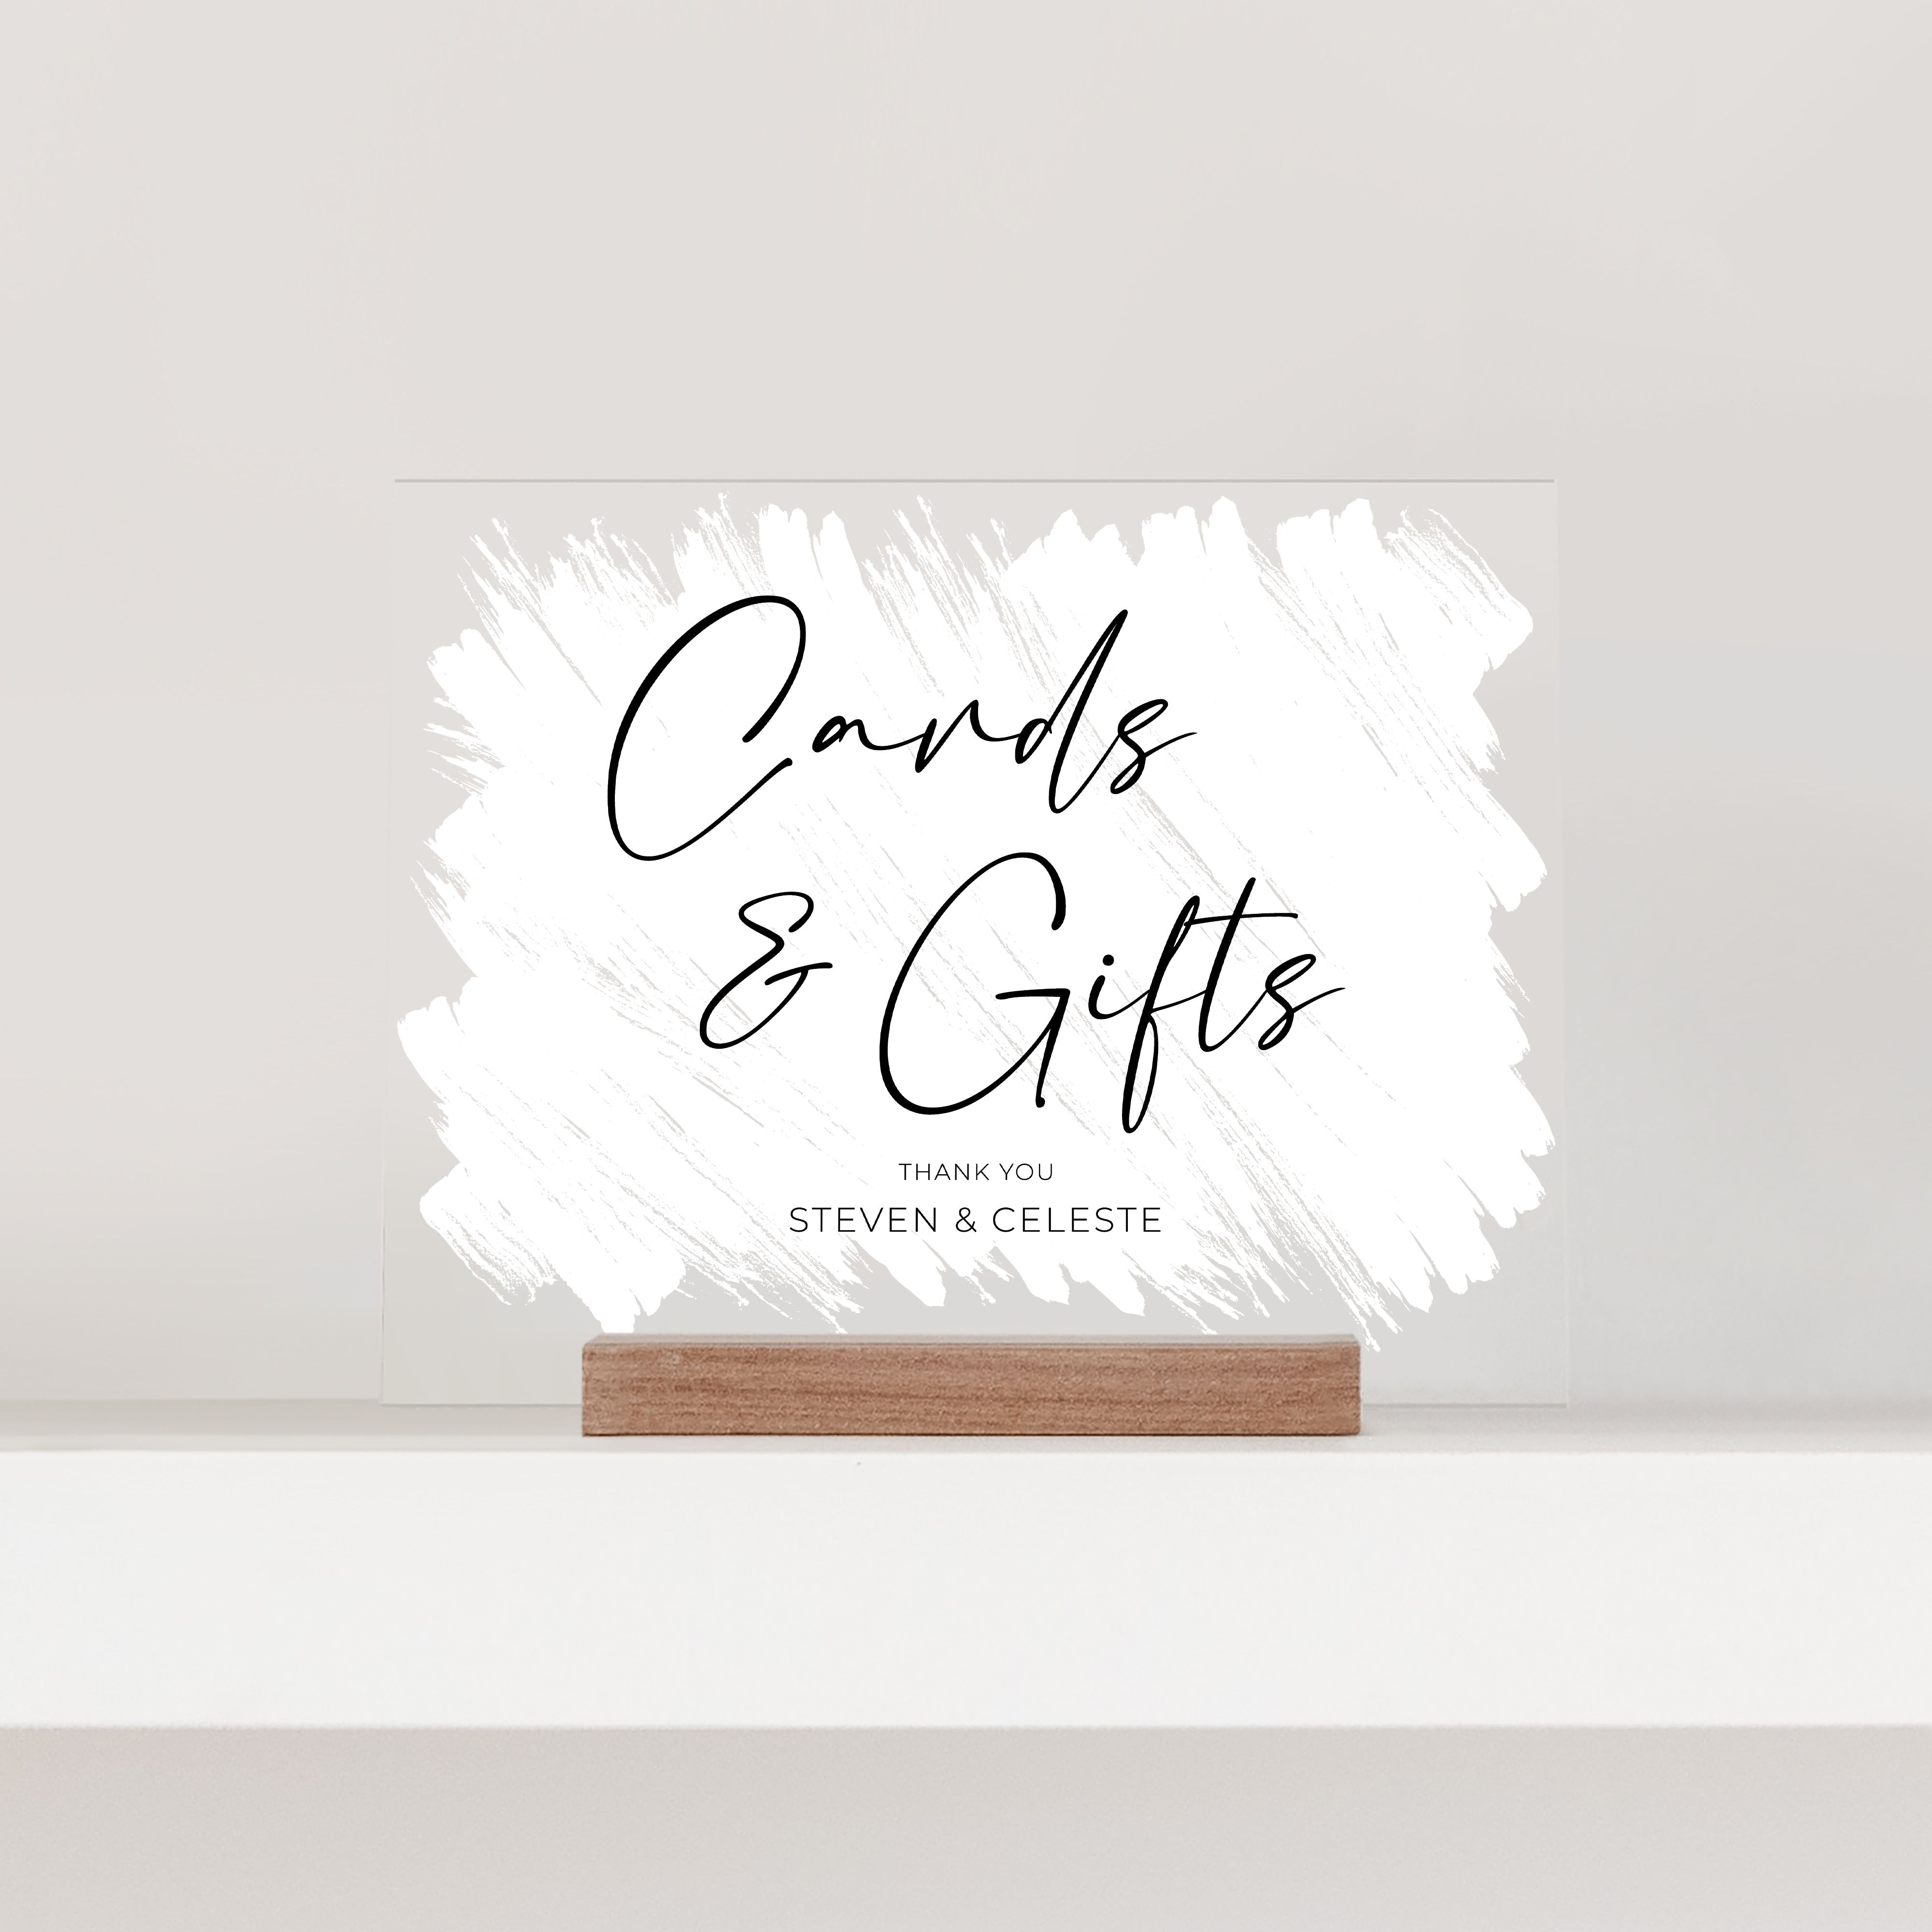 Small Brushed Acrylic Cards & Gifts Sign | Horizontal Olivia